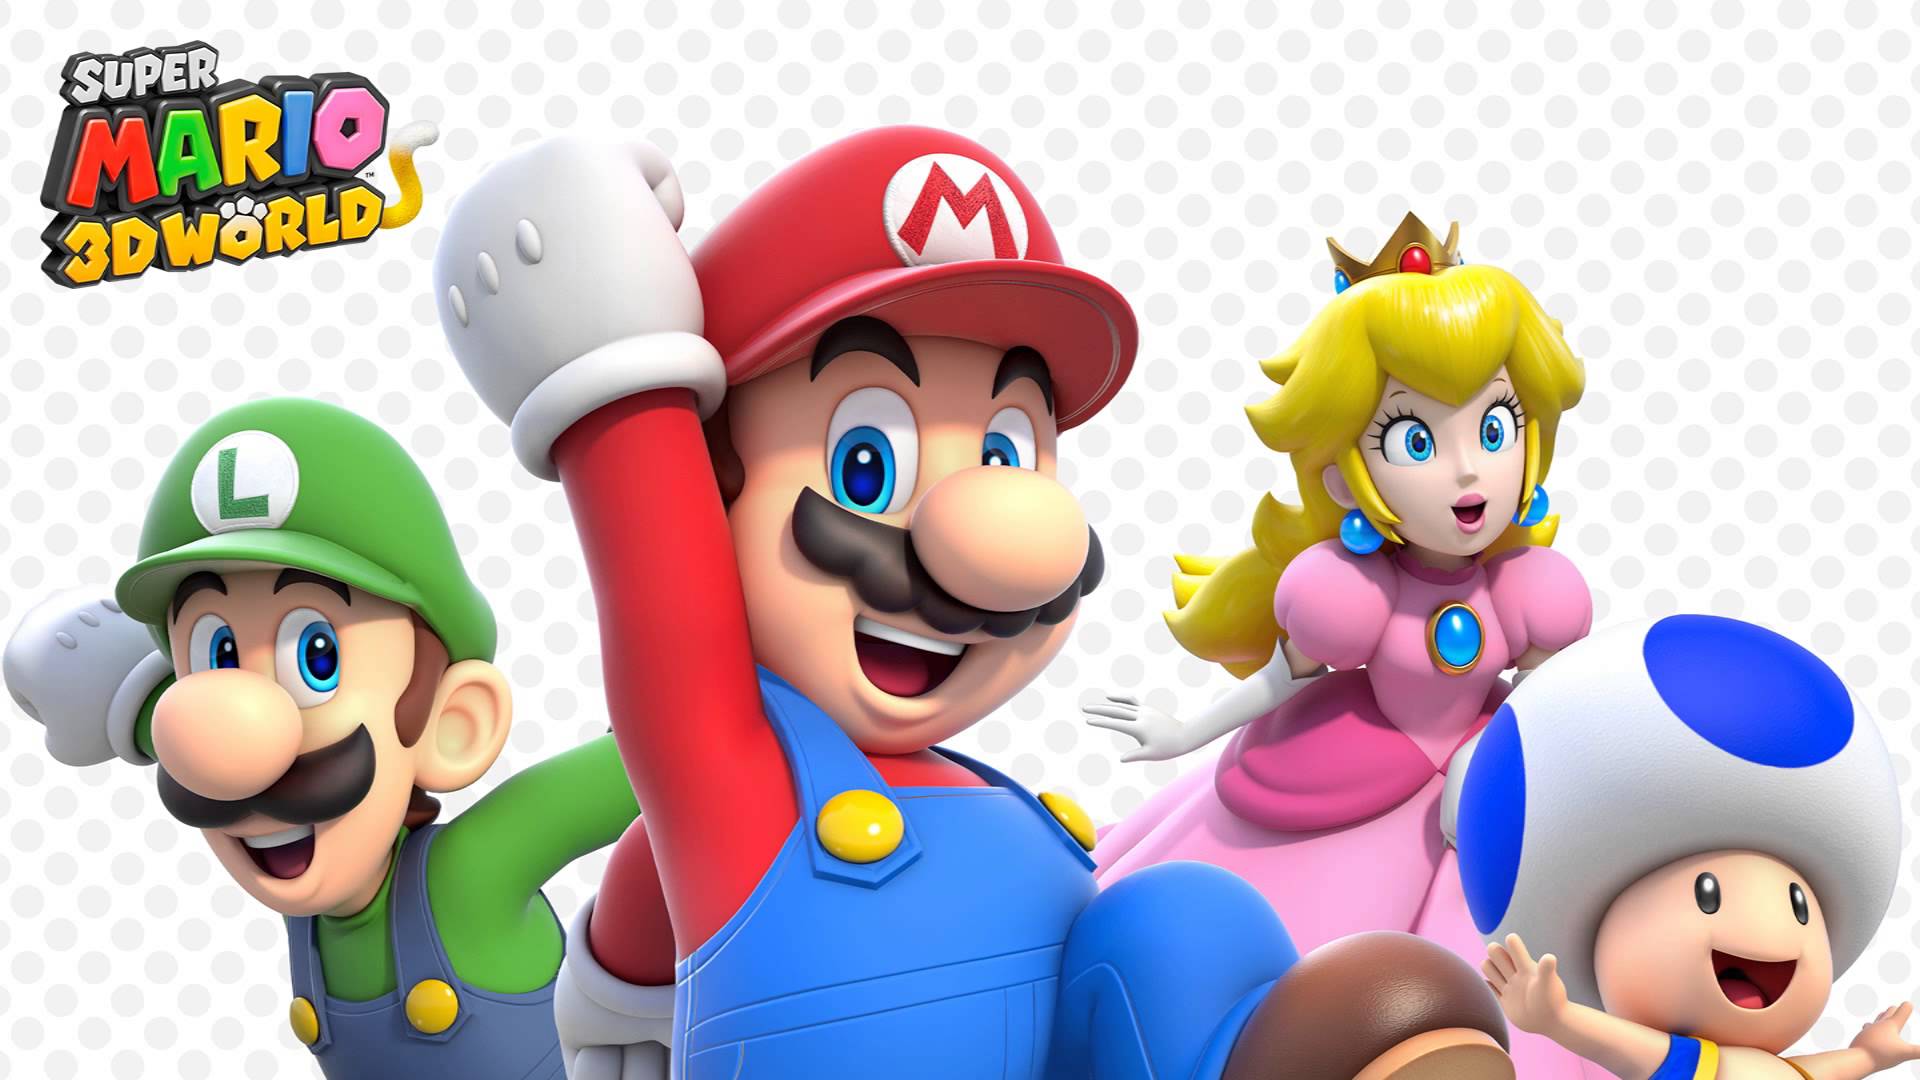 Super Mario 3d World HD Wallpaper Themes